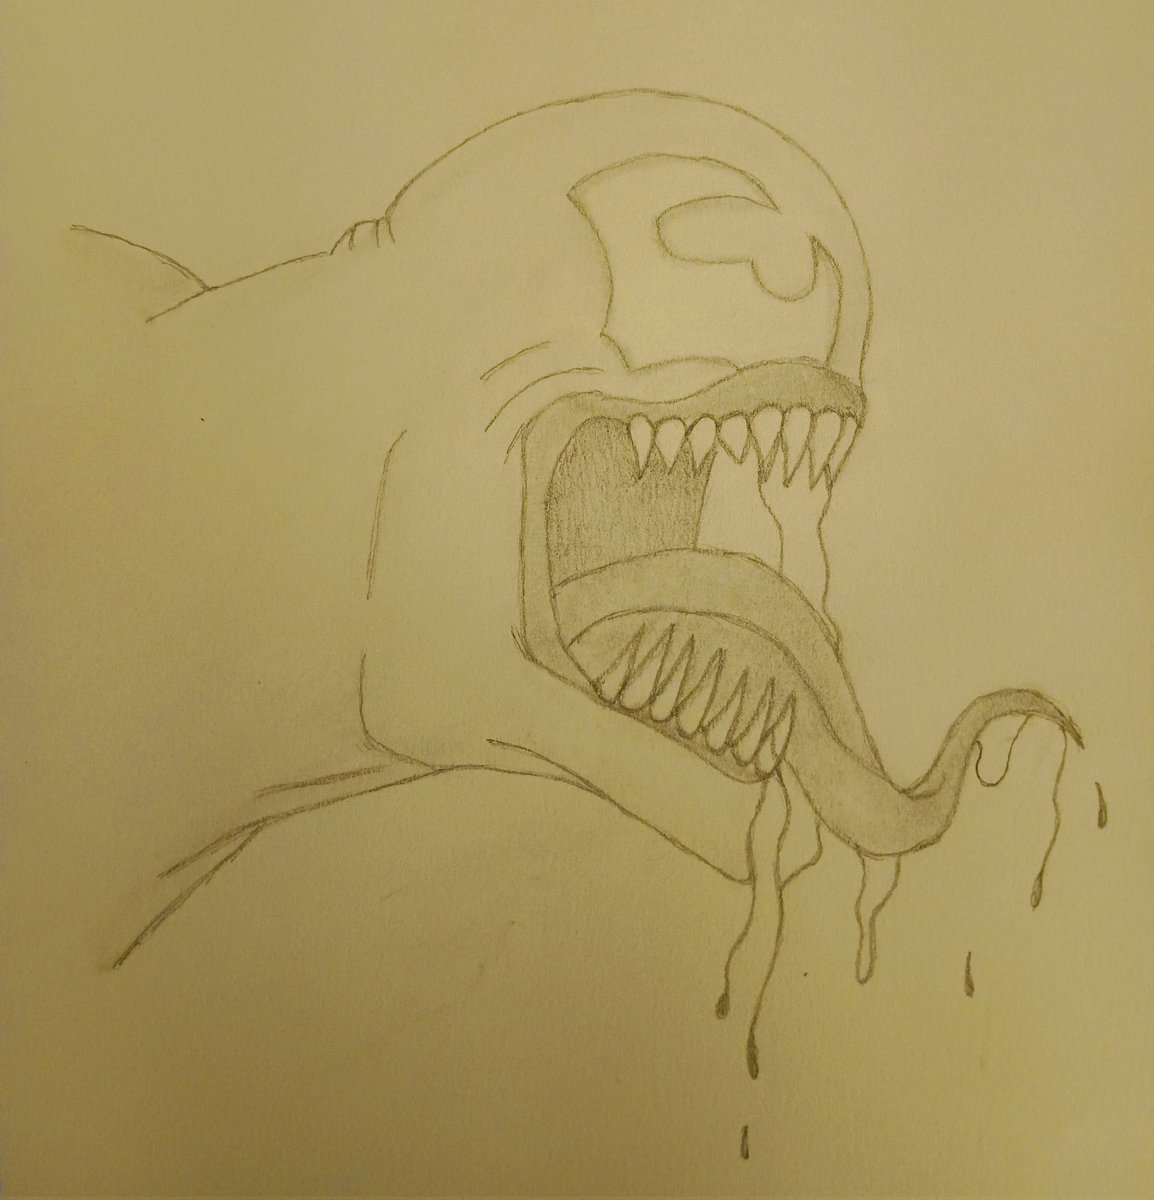 Venom Sketch part 2 #sketch#drawing#artislife#ilovetodraw#✏️✏️✏️🎨🎨🎨🙏🙏🙏👍👍👍😊😊😊